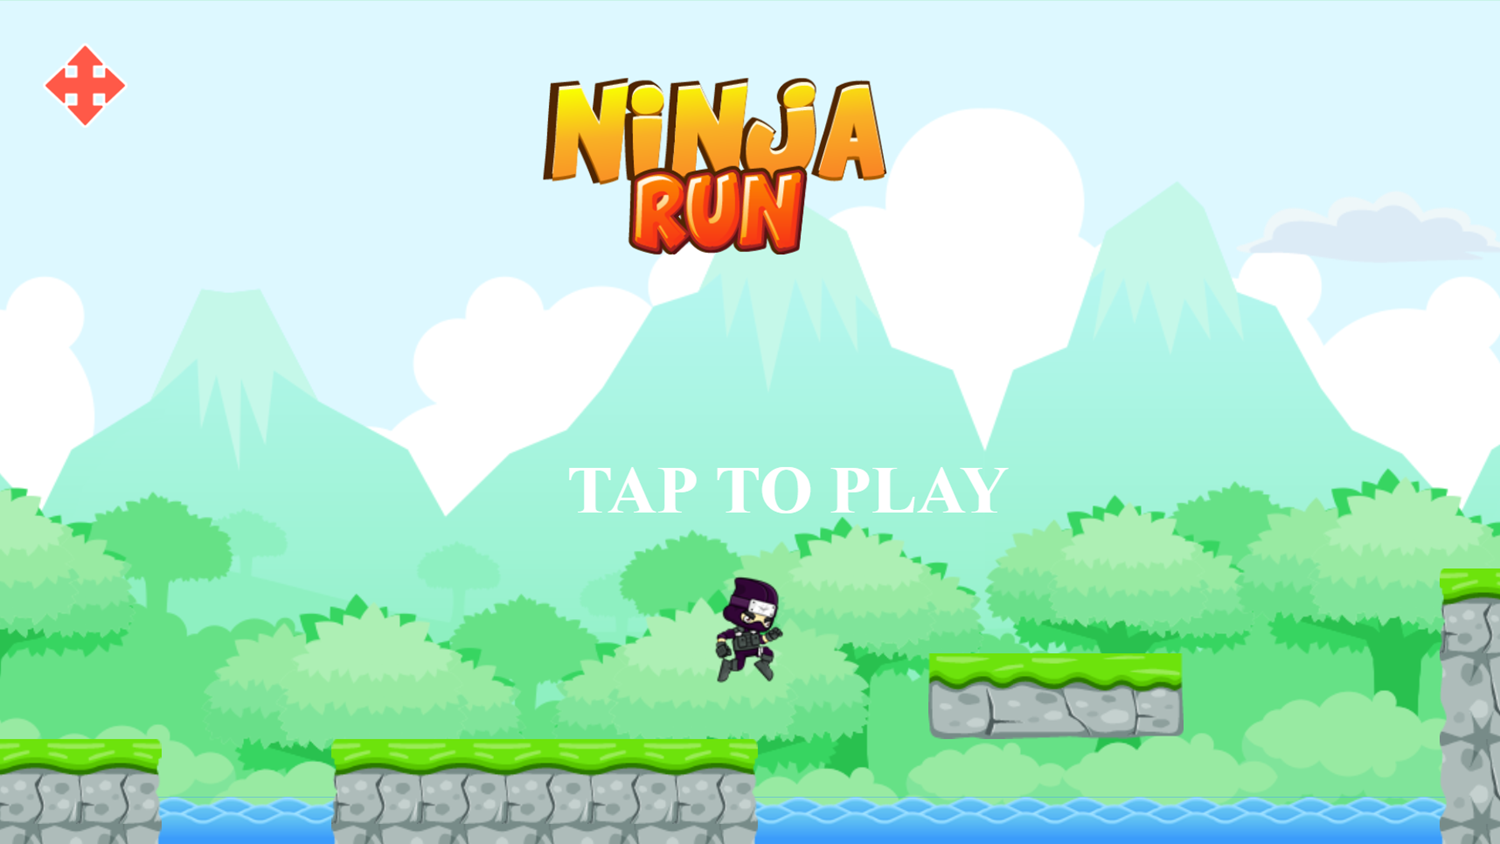 Ninja Run Adventure Game Welcome Screen Screenshot.